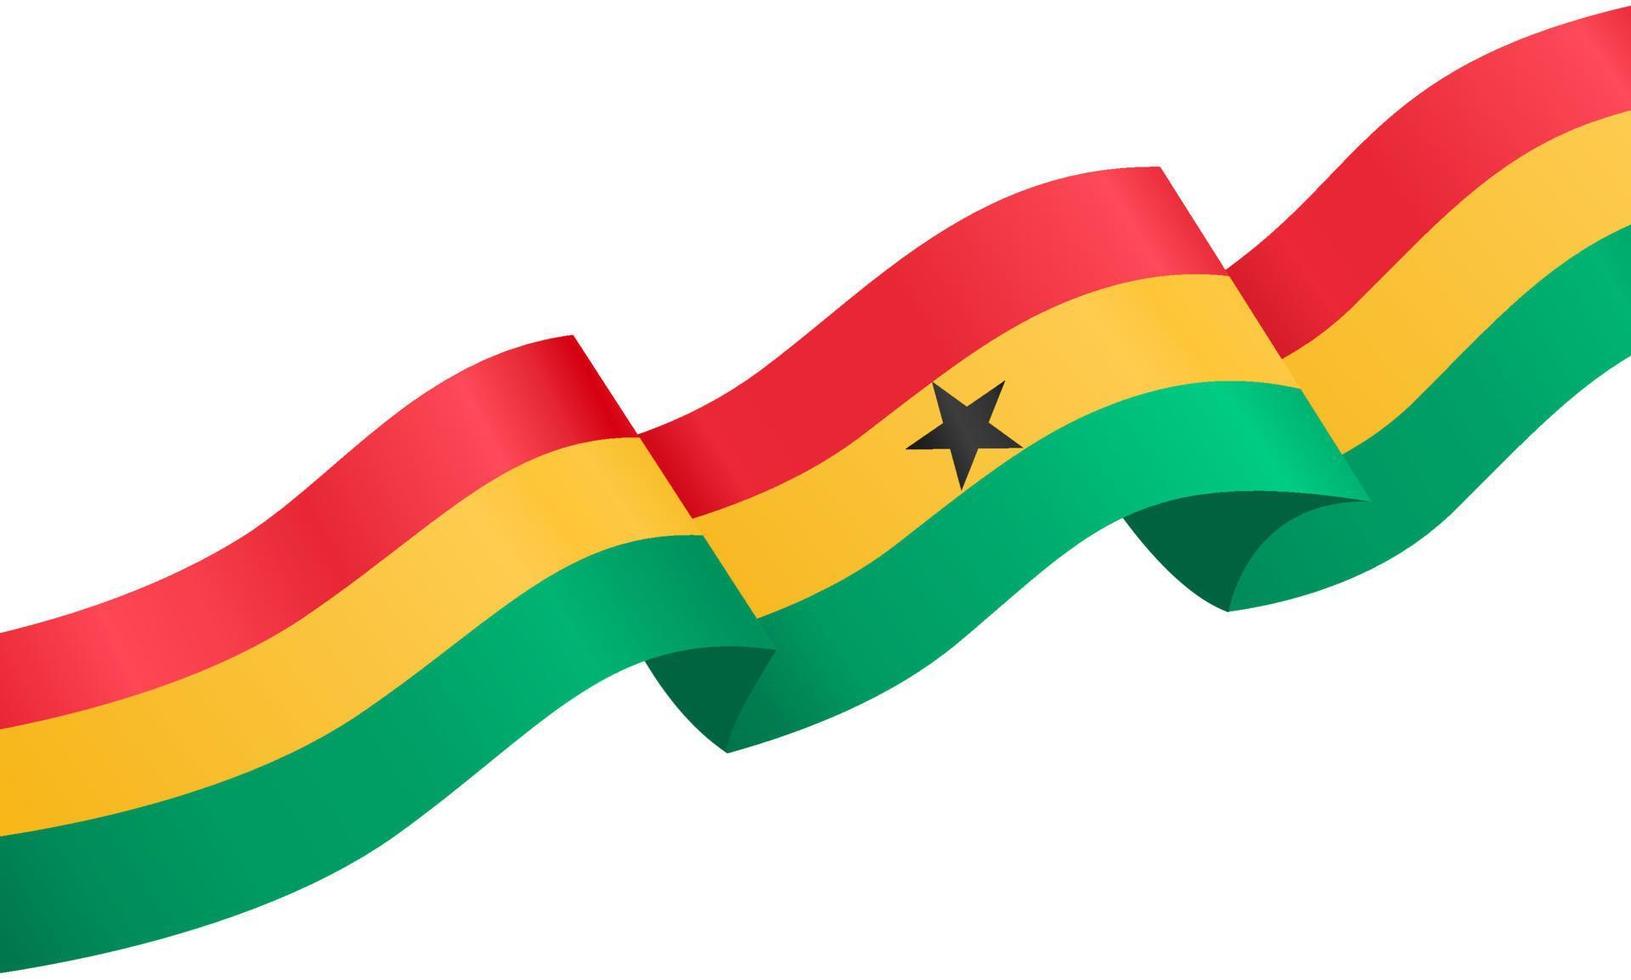 Ghana vlag Golf geïsoleerd op png of transparante achtergrond, symbool Ghana. vector illustratie